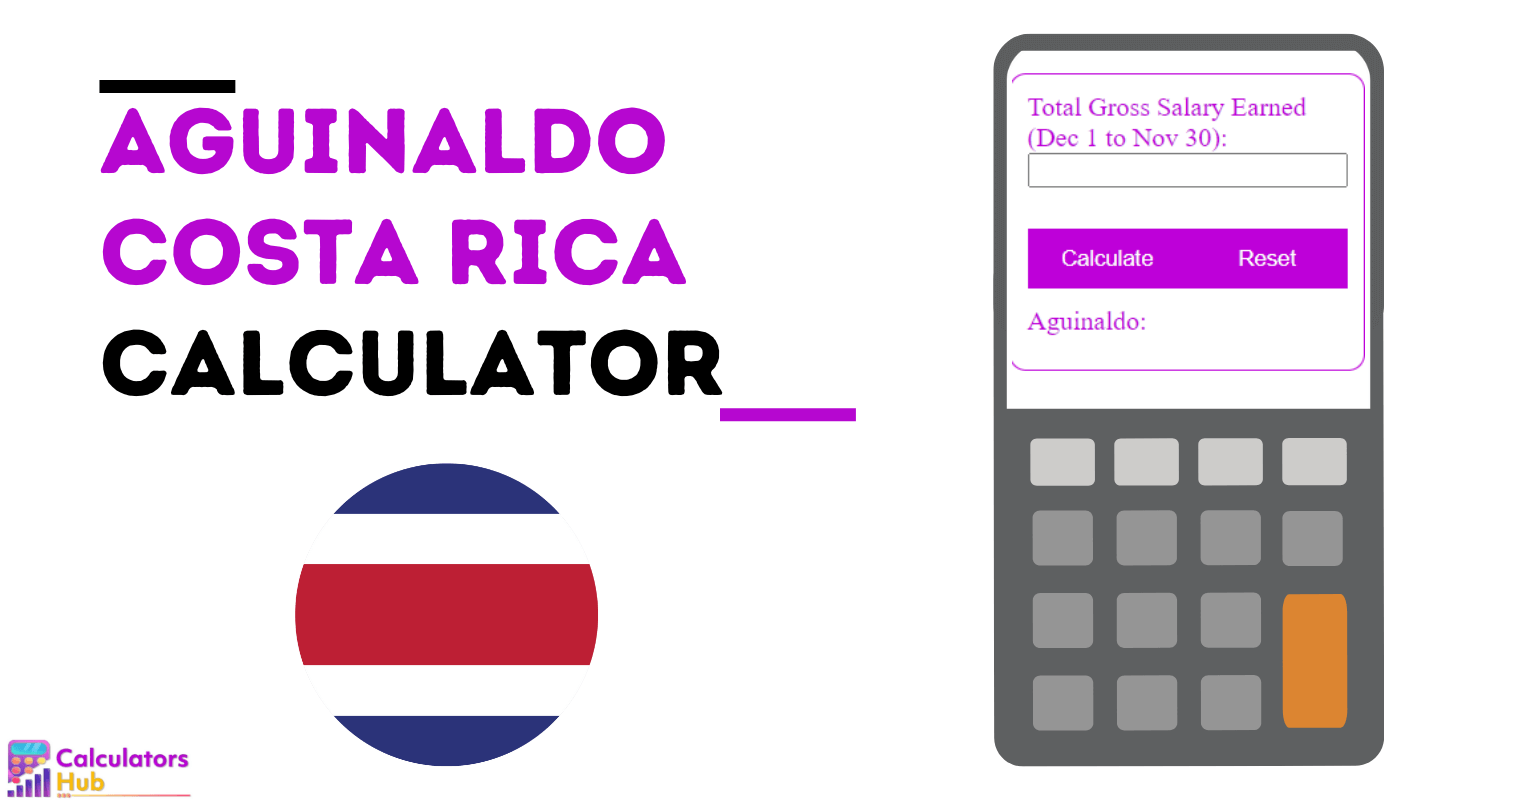 Aguinaldo Costa Rica Calculator